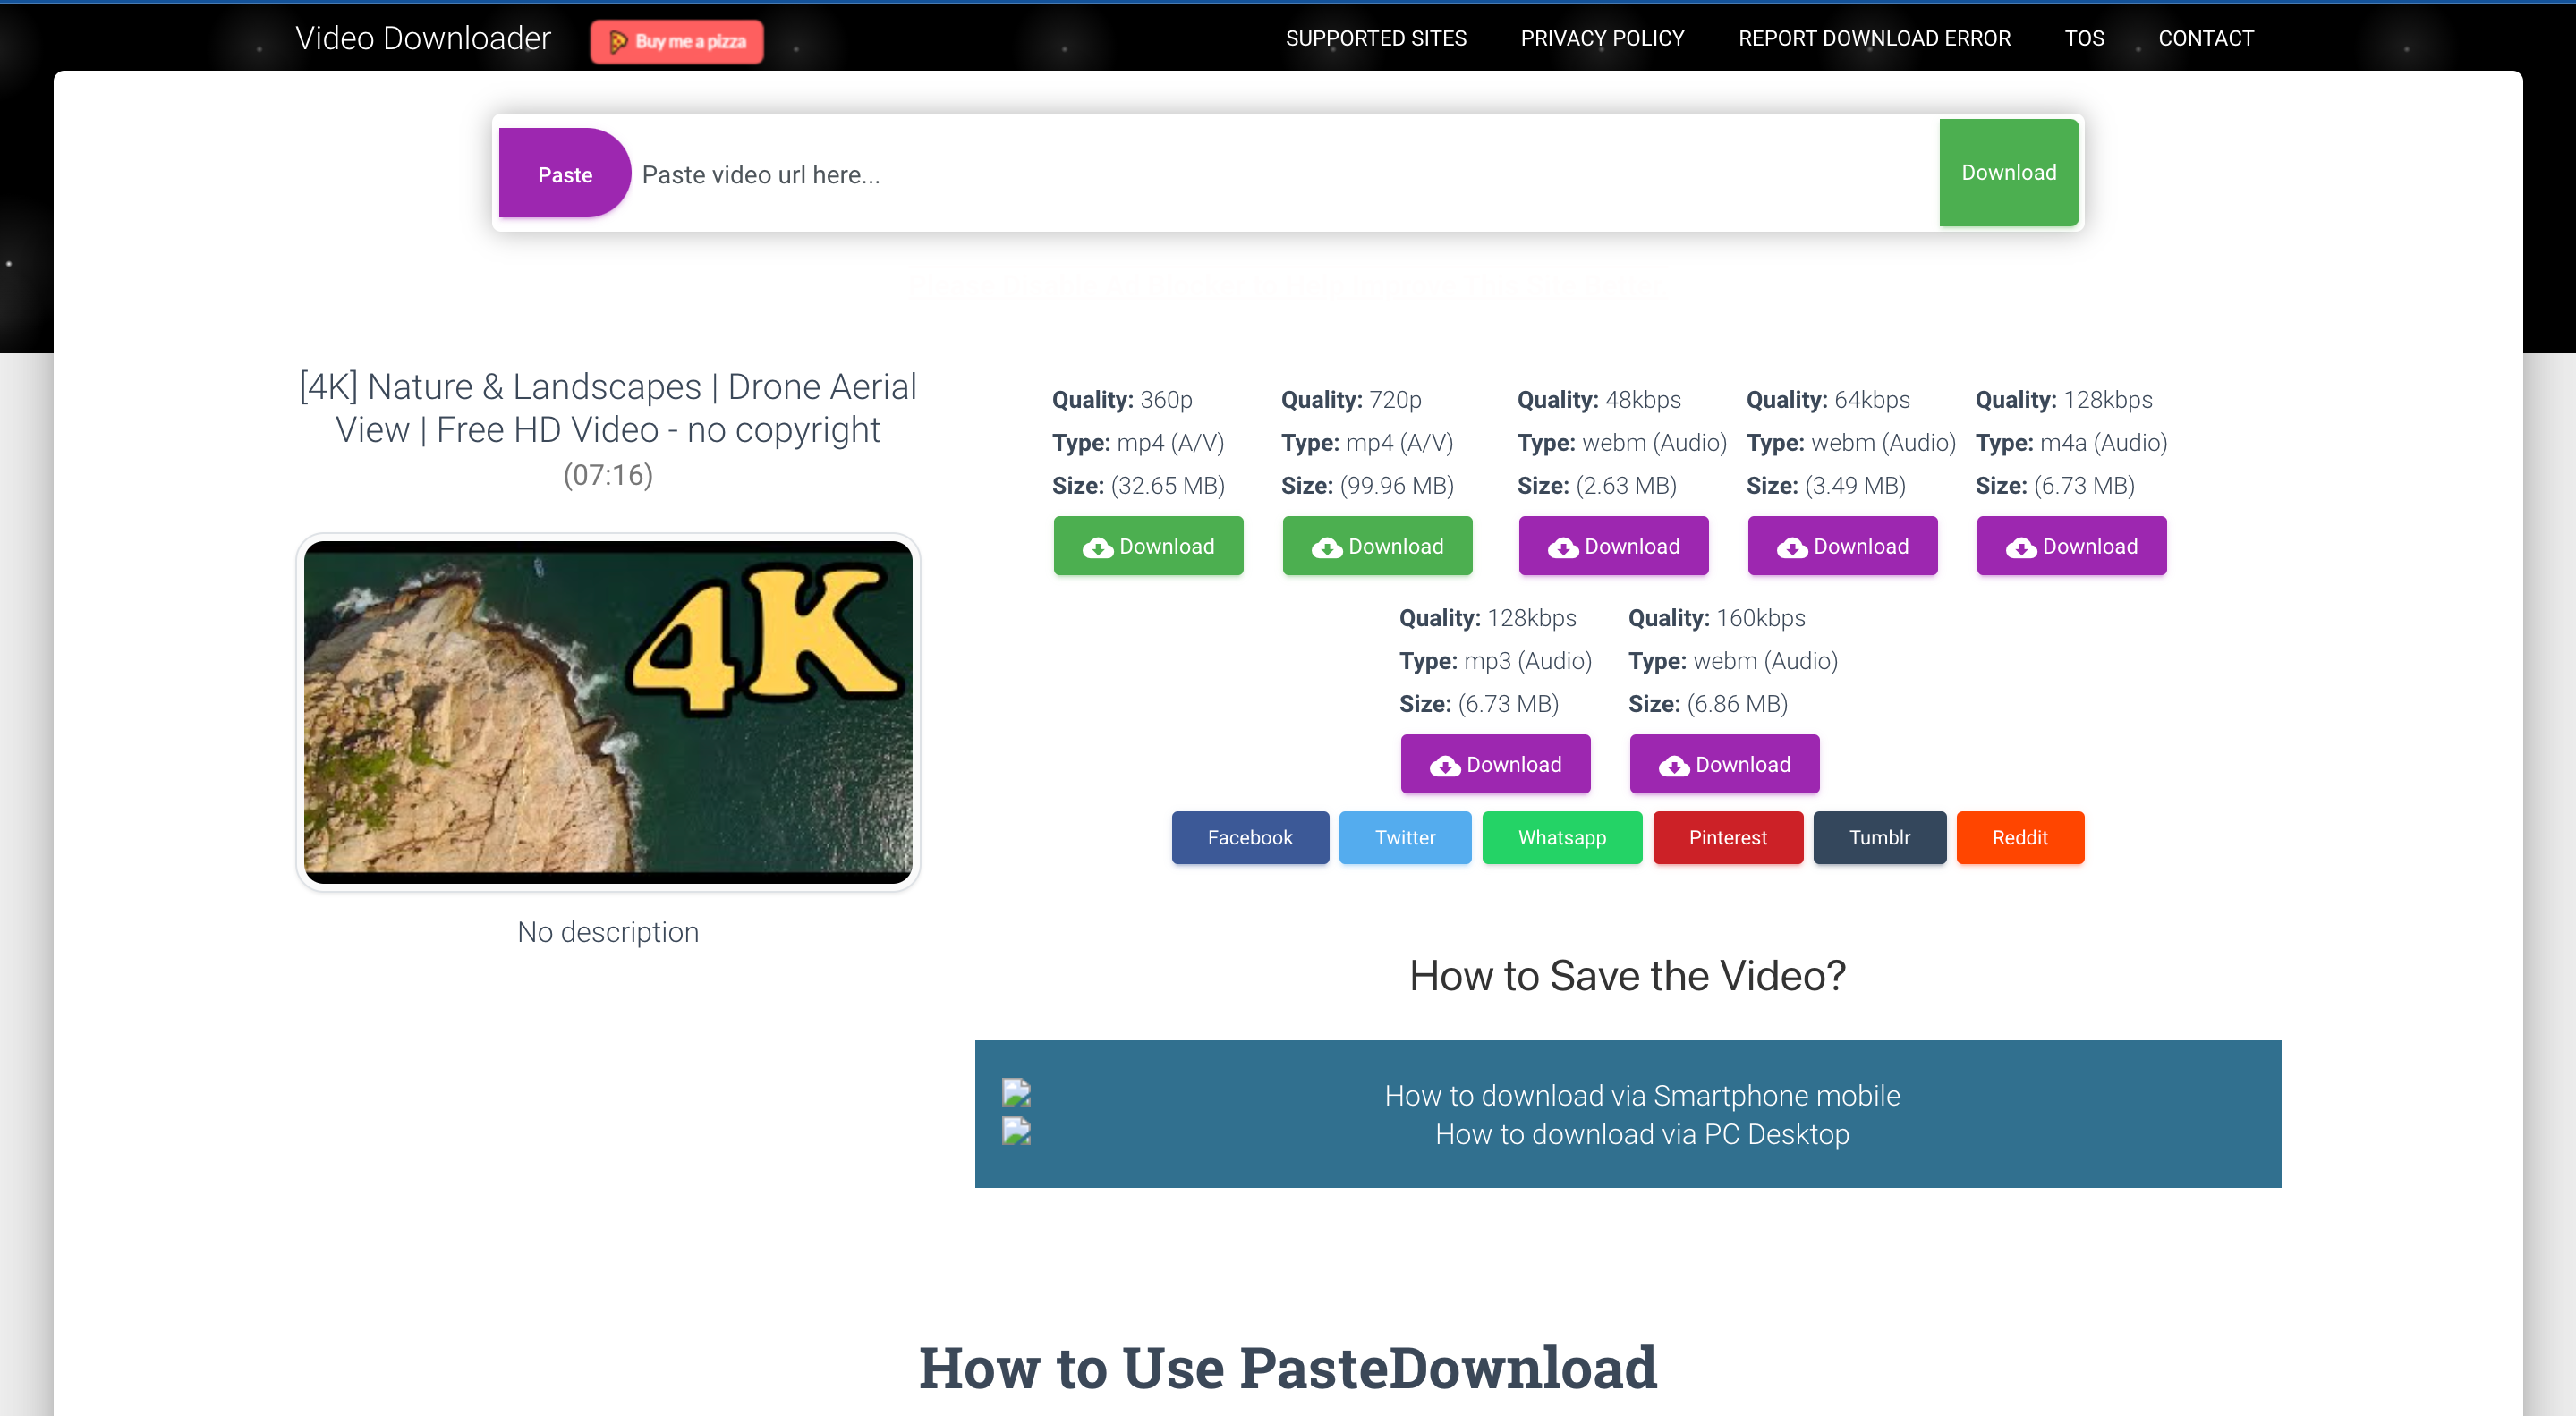 Screenshot of PasteDownload video downloader